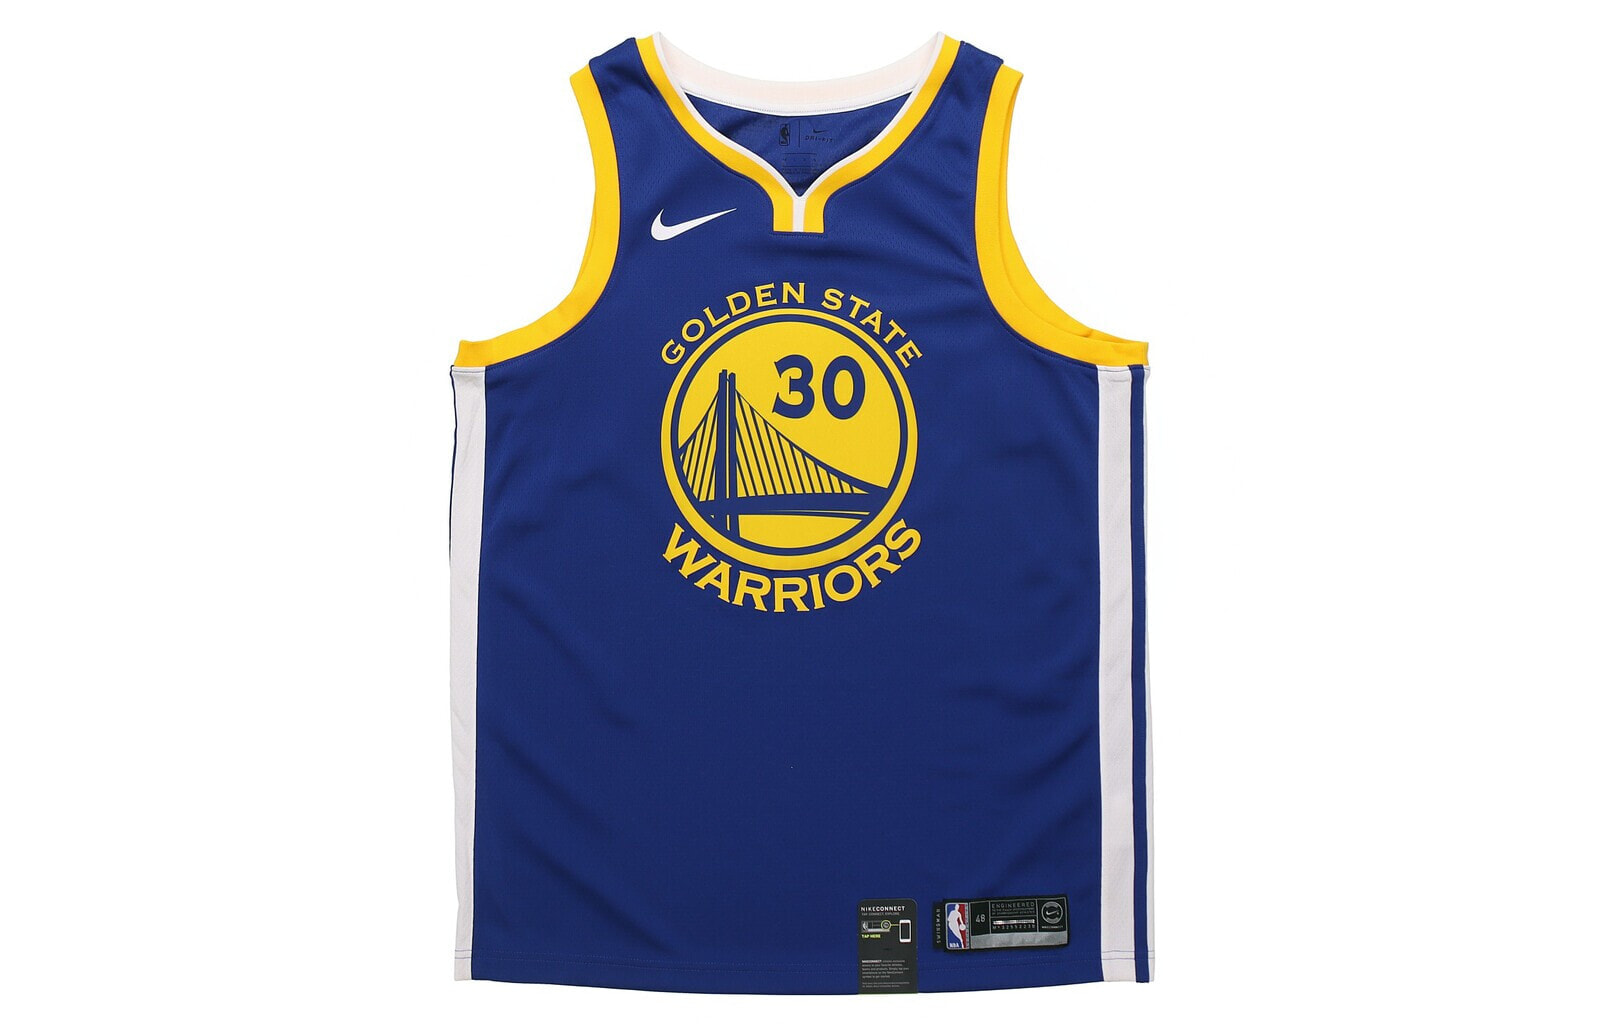 Nike NBA Stephen Curry Golden State Warriors 篮球背心 SW球迷版 球衣库里30号 男款 蓝色 / Майка Nike NBA Stephen Curry Golden State Warriors SW 30 864475-495